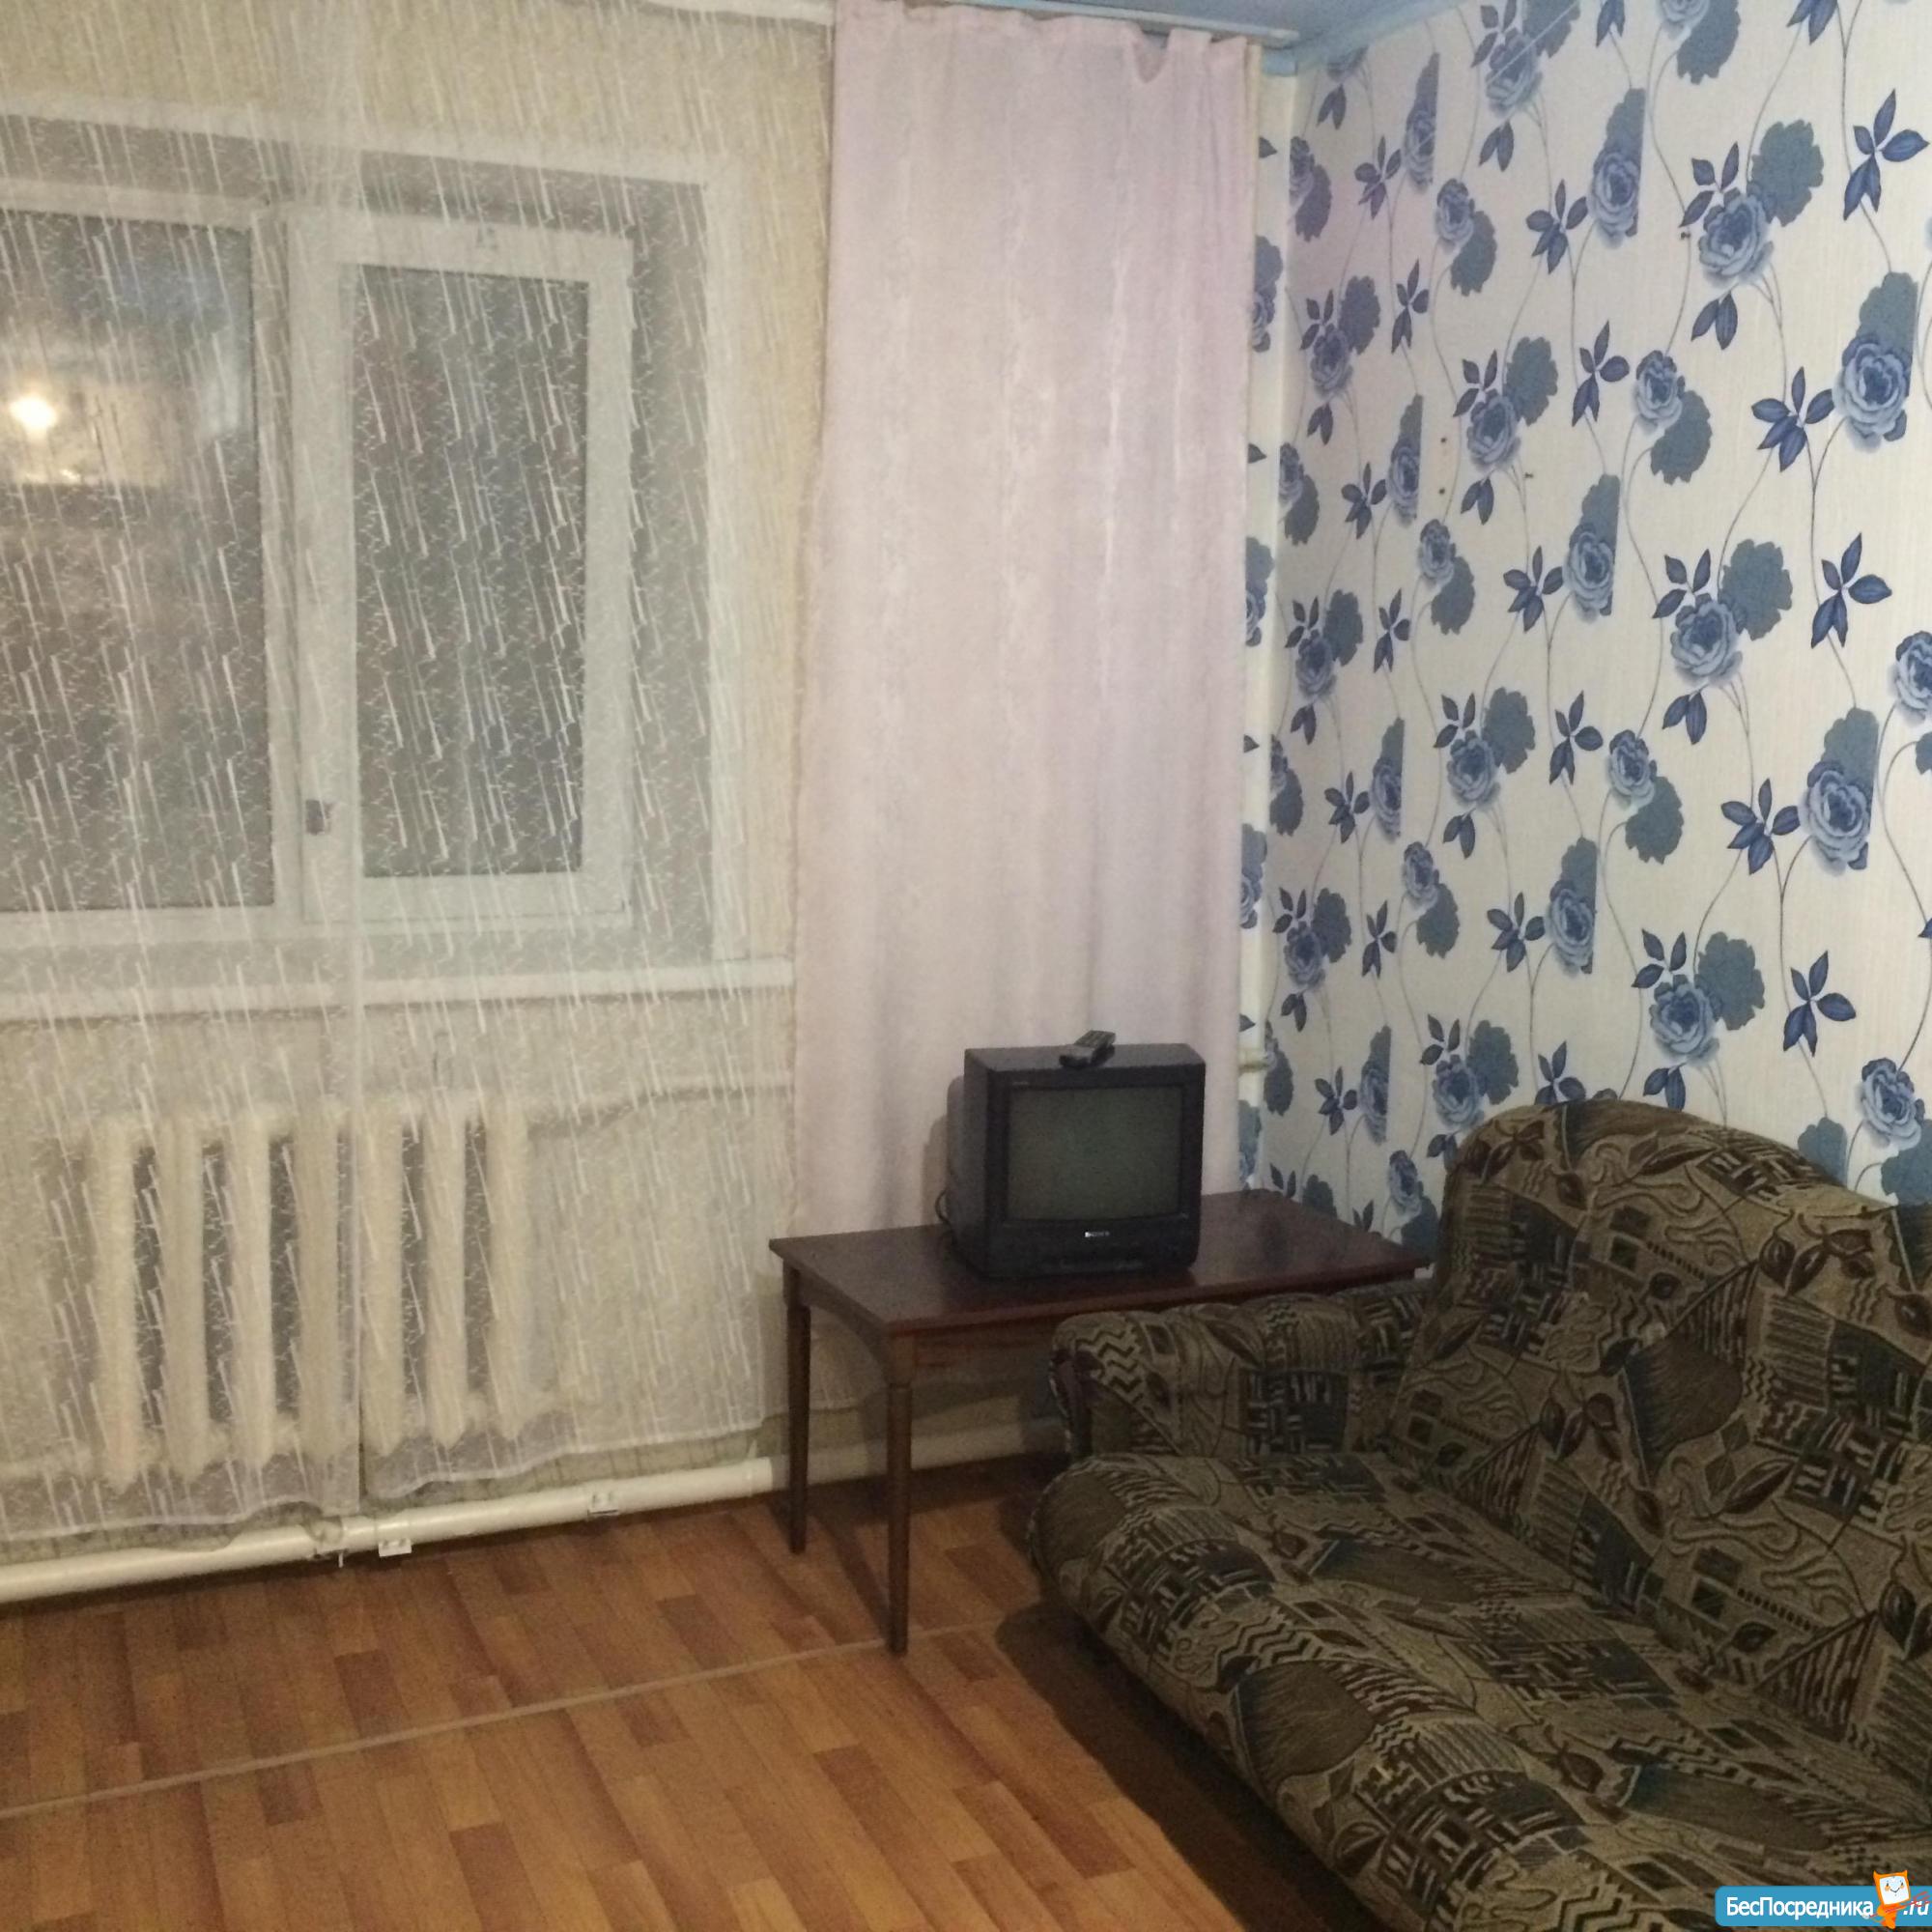 Снять 1 комнатную квартиру в Барнауле без посредников. Снять жильё без посредников в Барнауле.